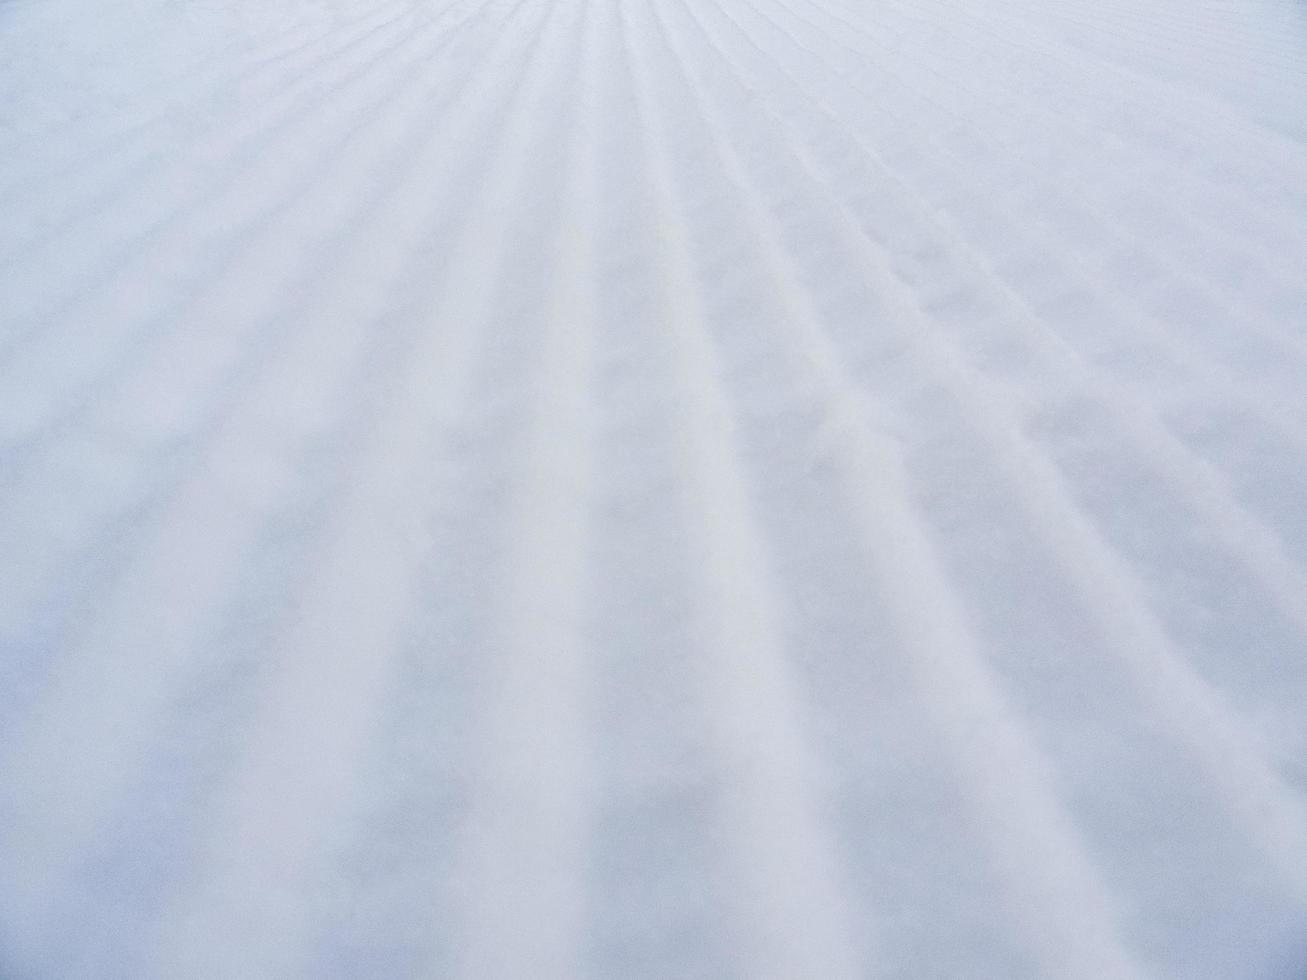 Waves of snow texture macro photography, Norway. photo